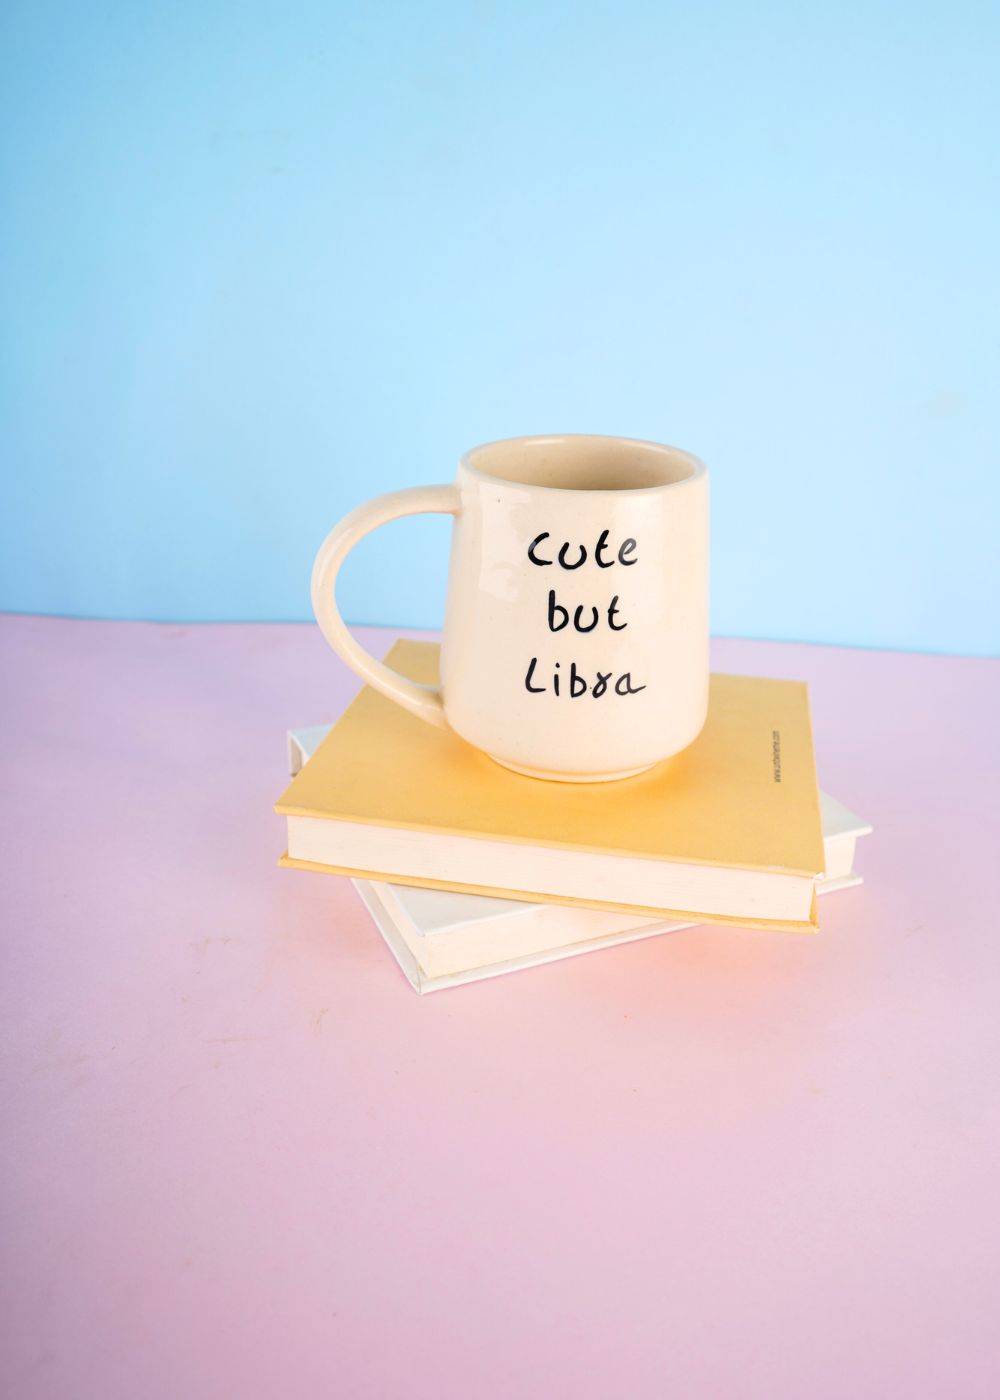 cute but libra mug made by ceramic 